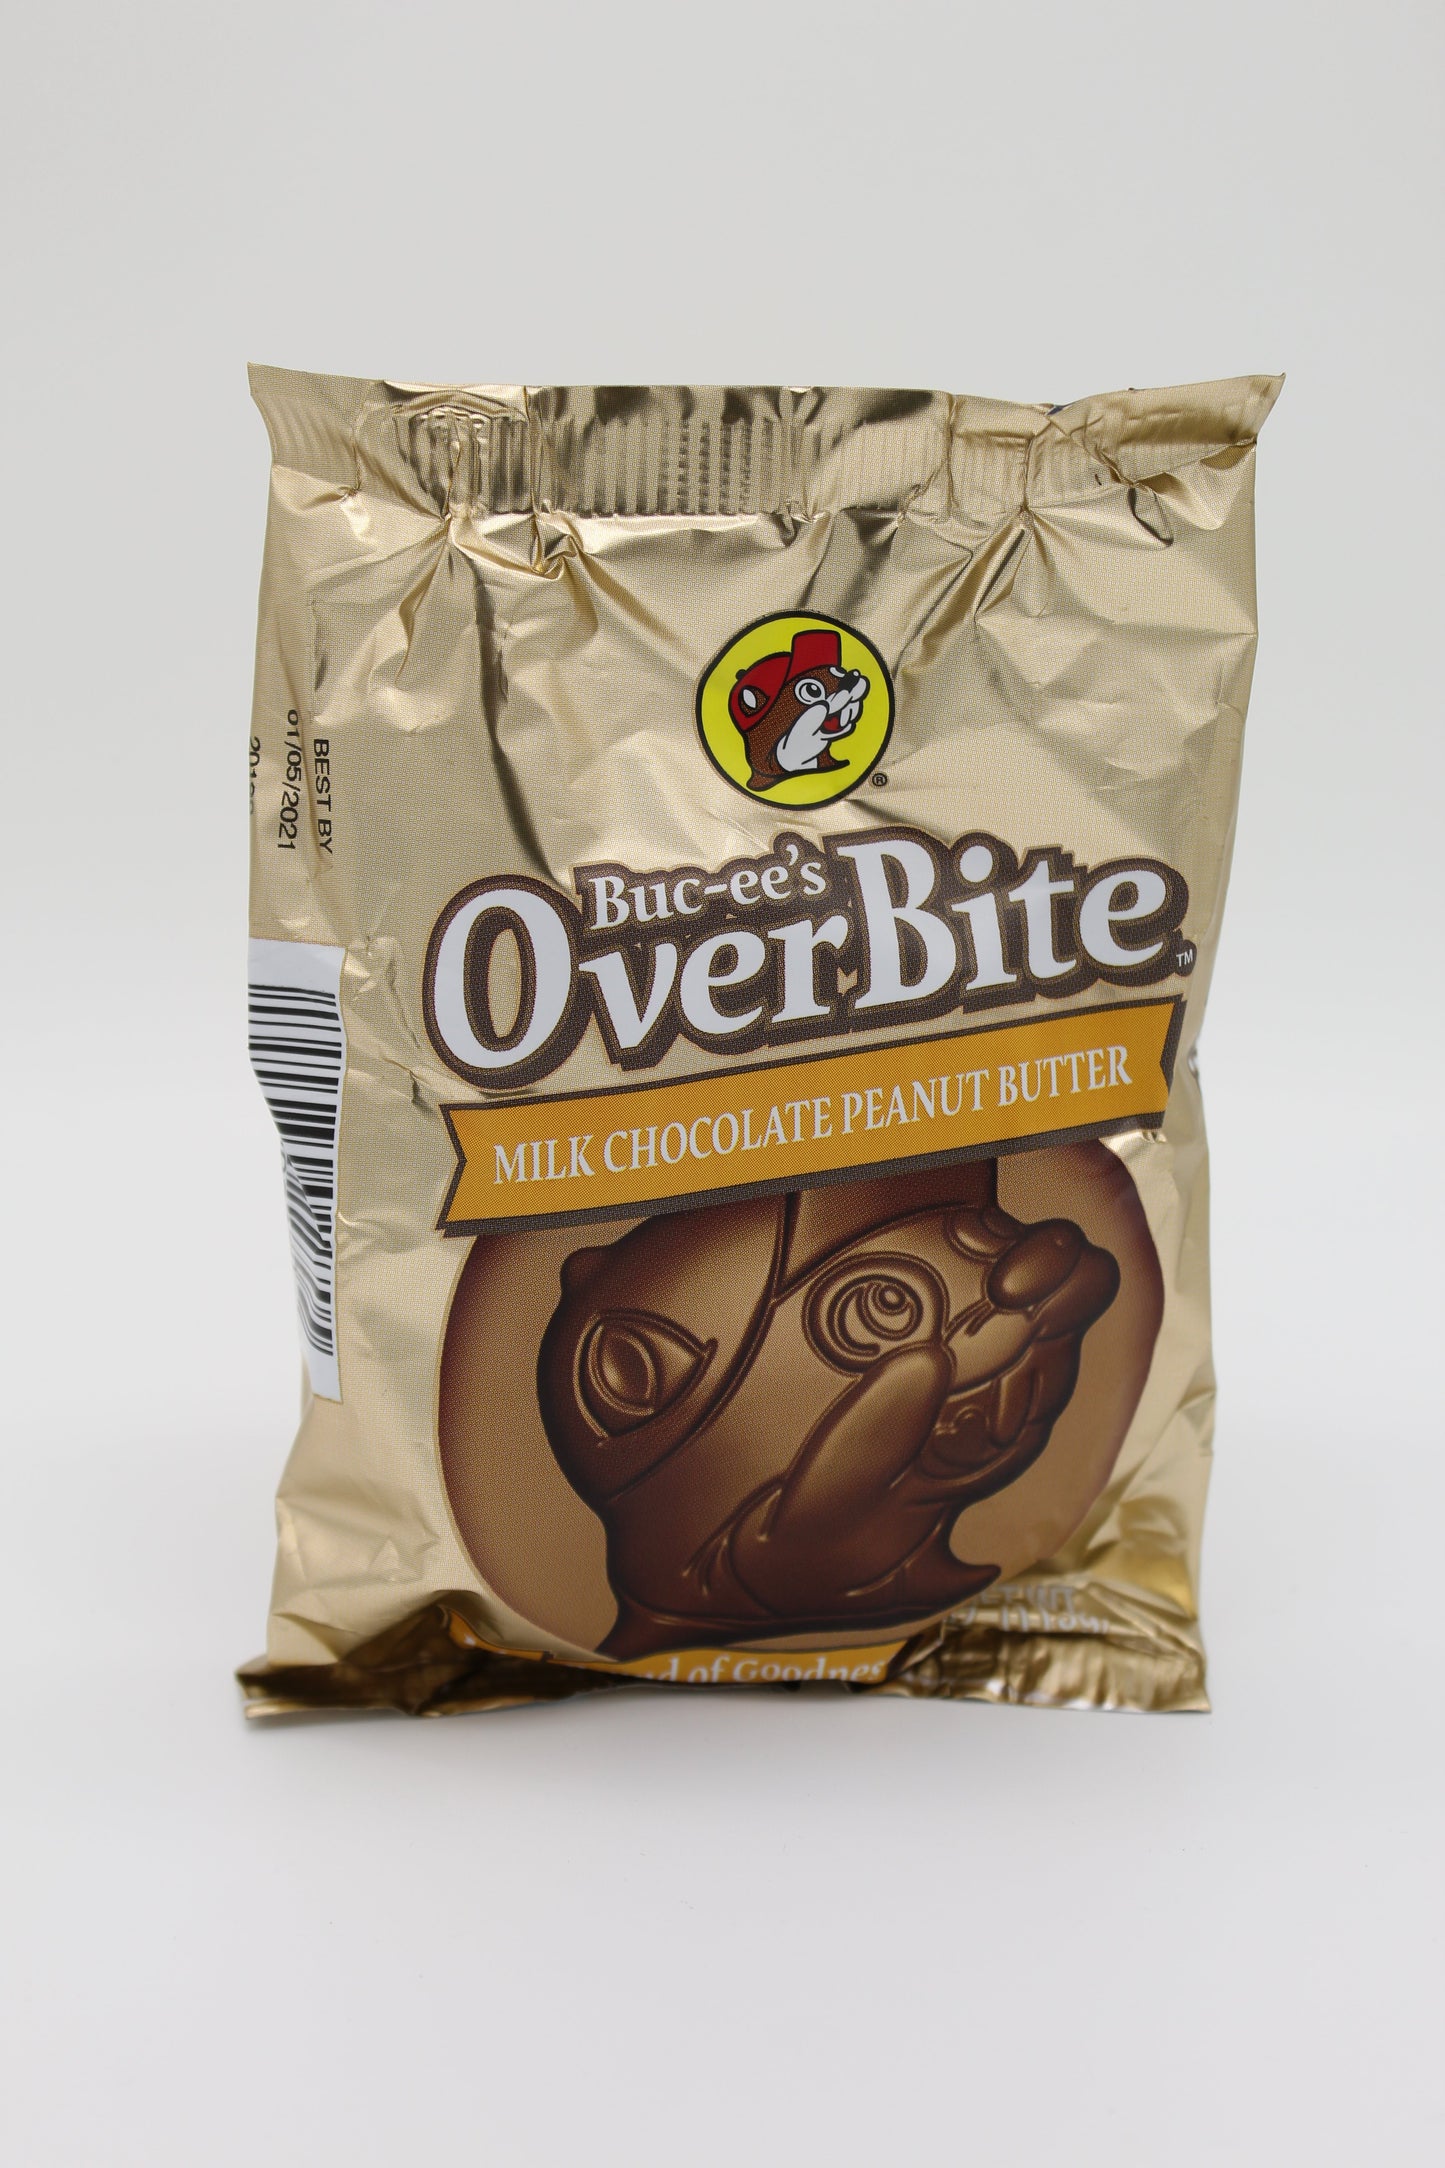 Overbite PB Milk Chocolate